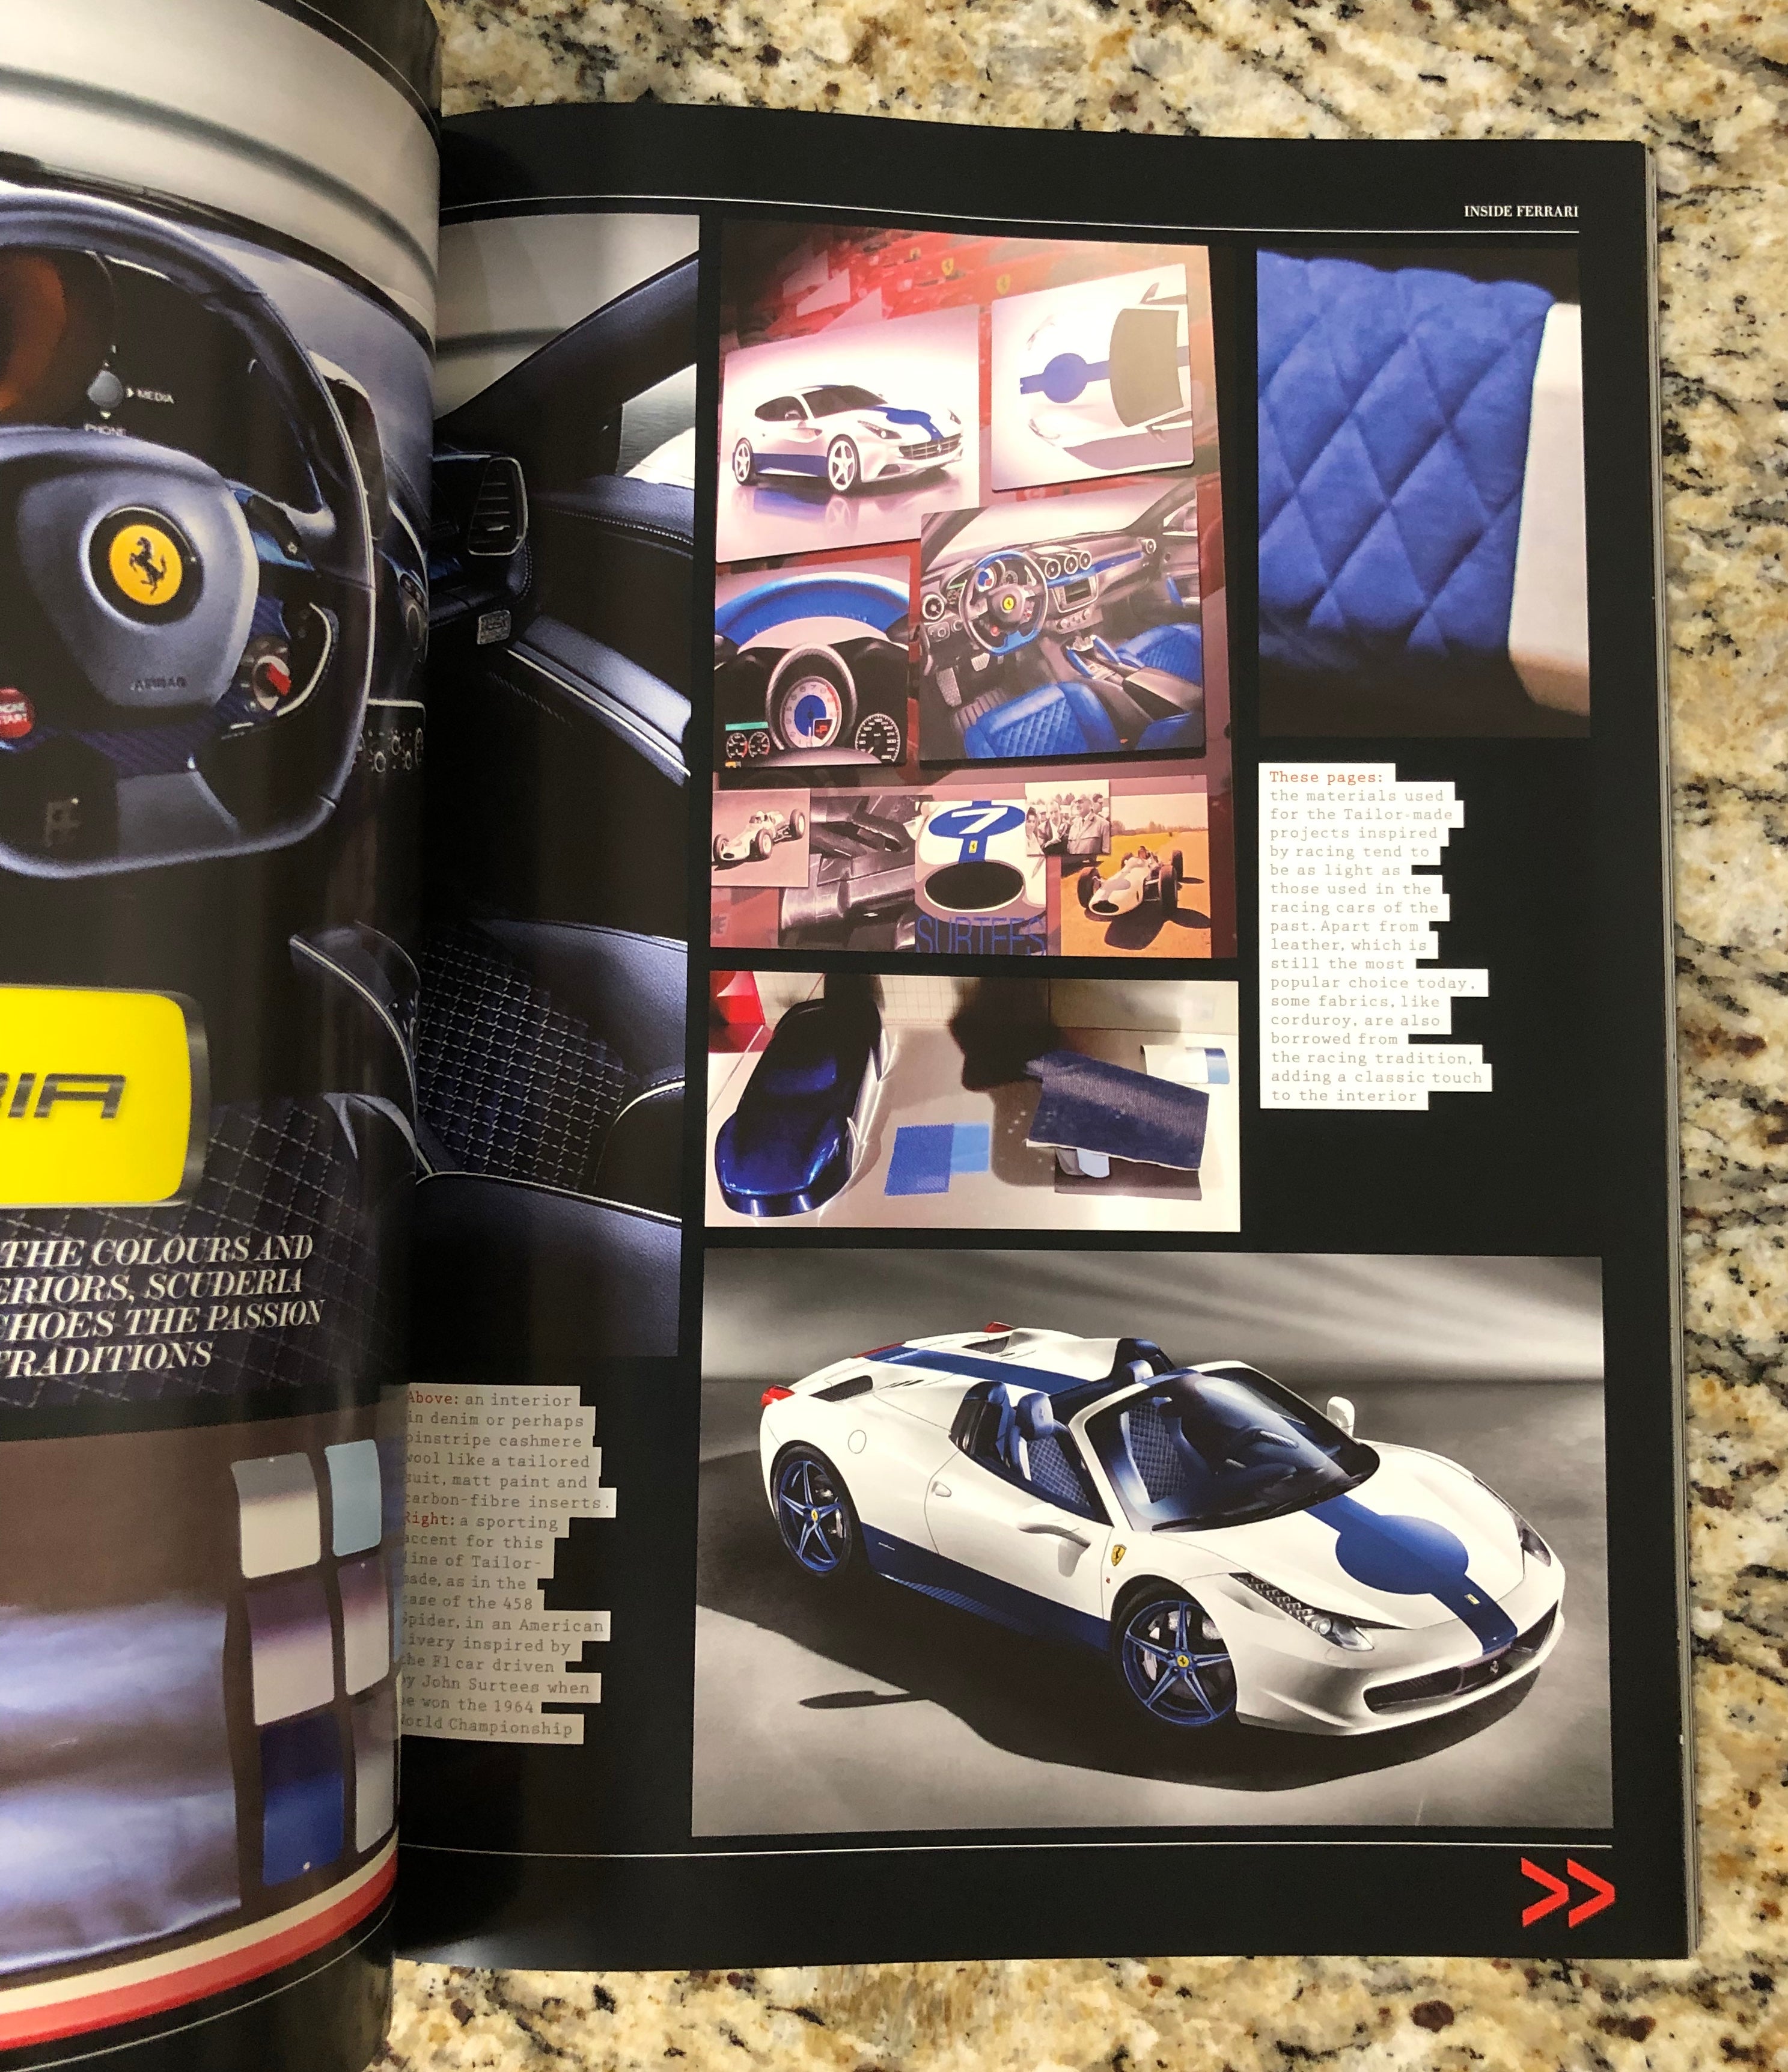 2011 Ferrari Yearbook